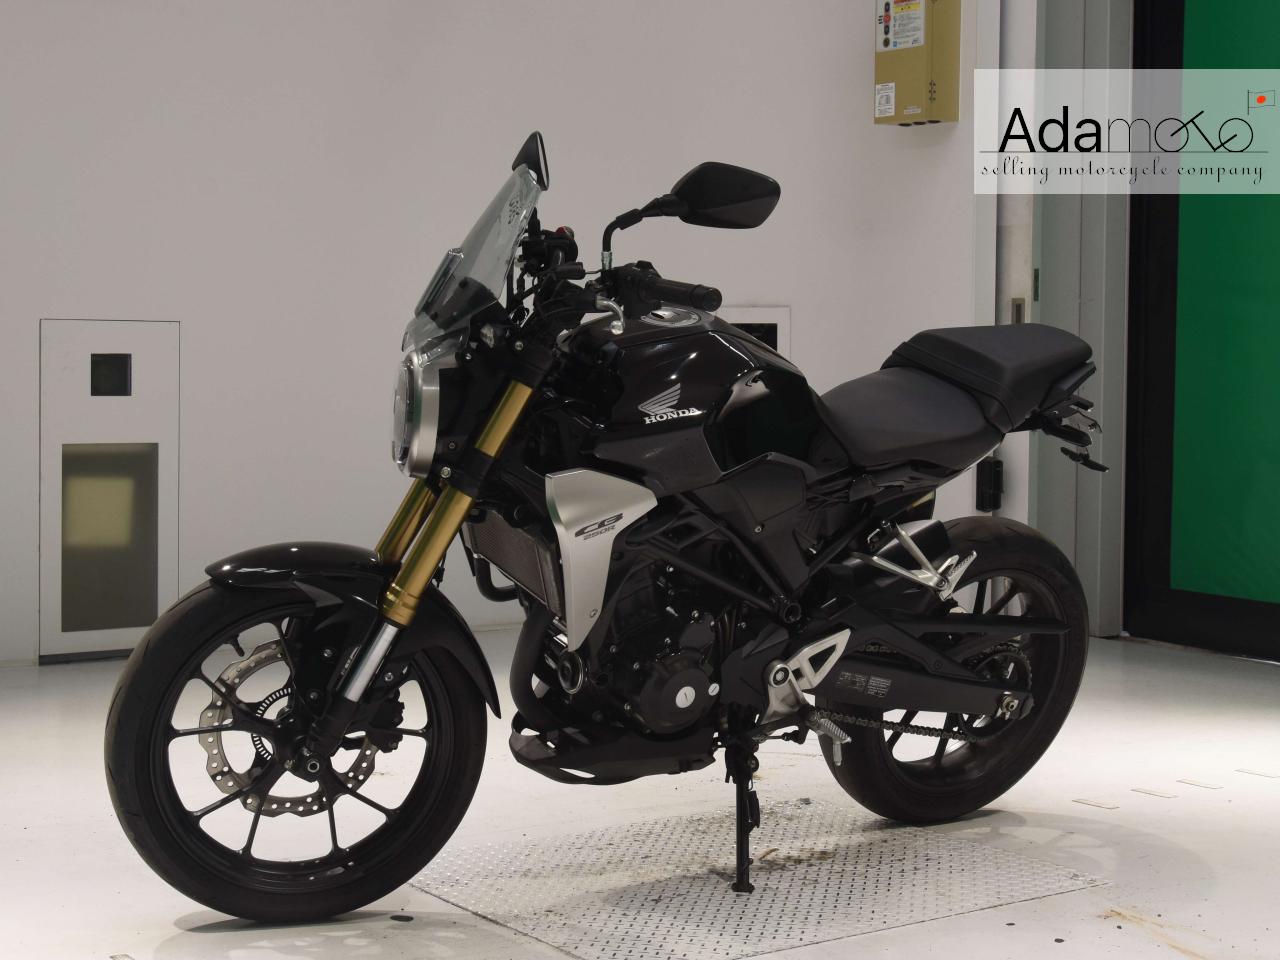 Honda CB250R - Adamoto - Motorcycles from Japan